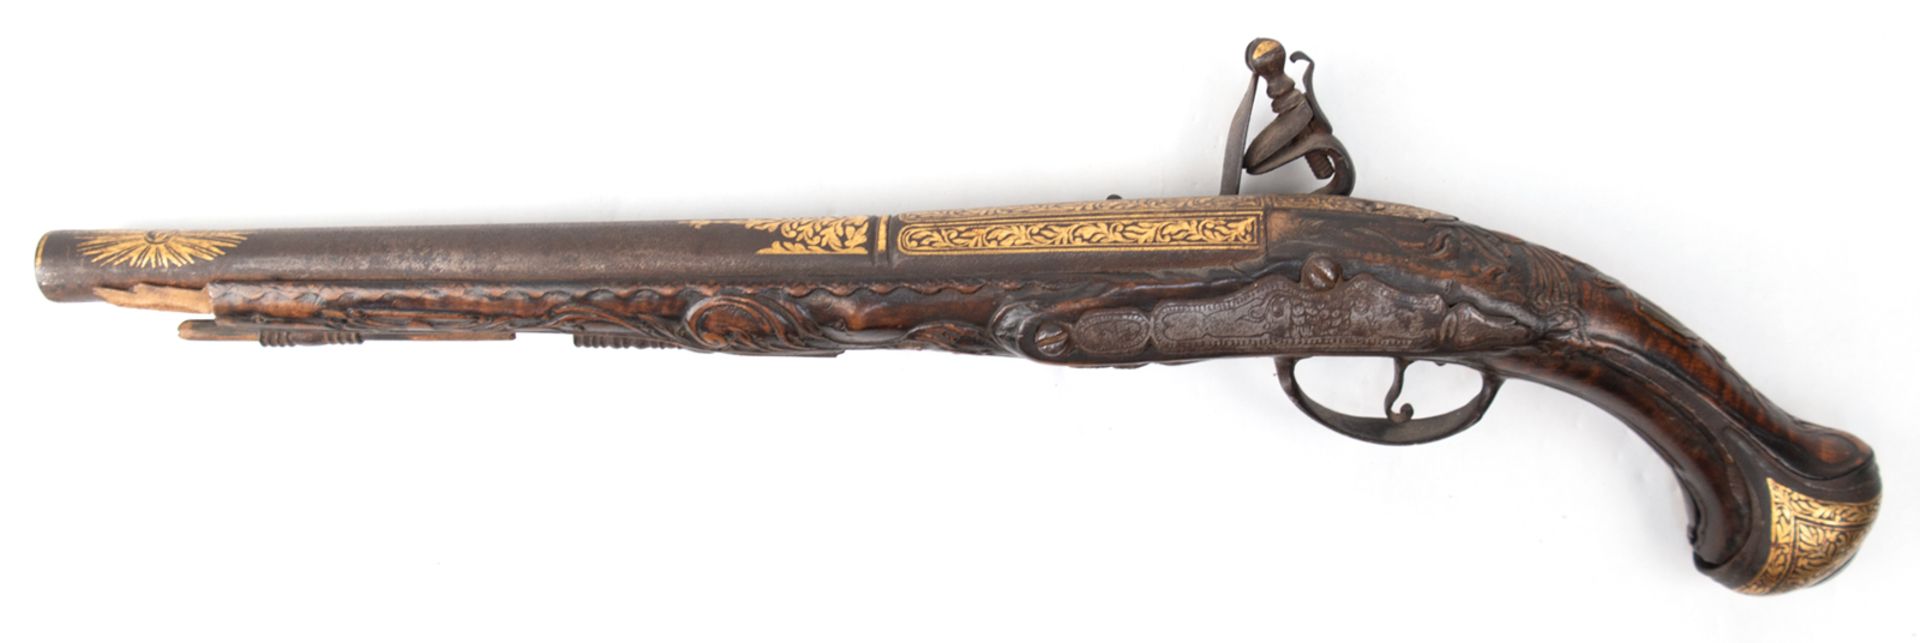 Steinschloßpistole, 18. Jh., nicht funktionstüchtig, Schloß defekt, starke Gebrauchspuren, L. 49 cm - Bild 2 aus 2